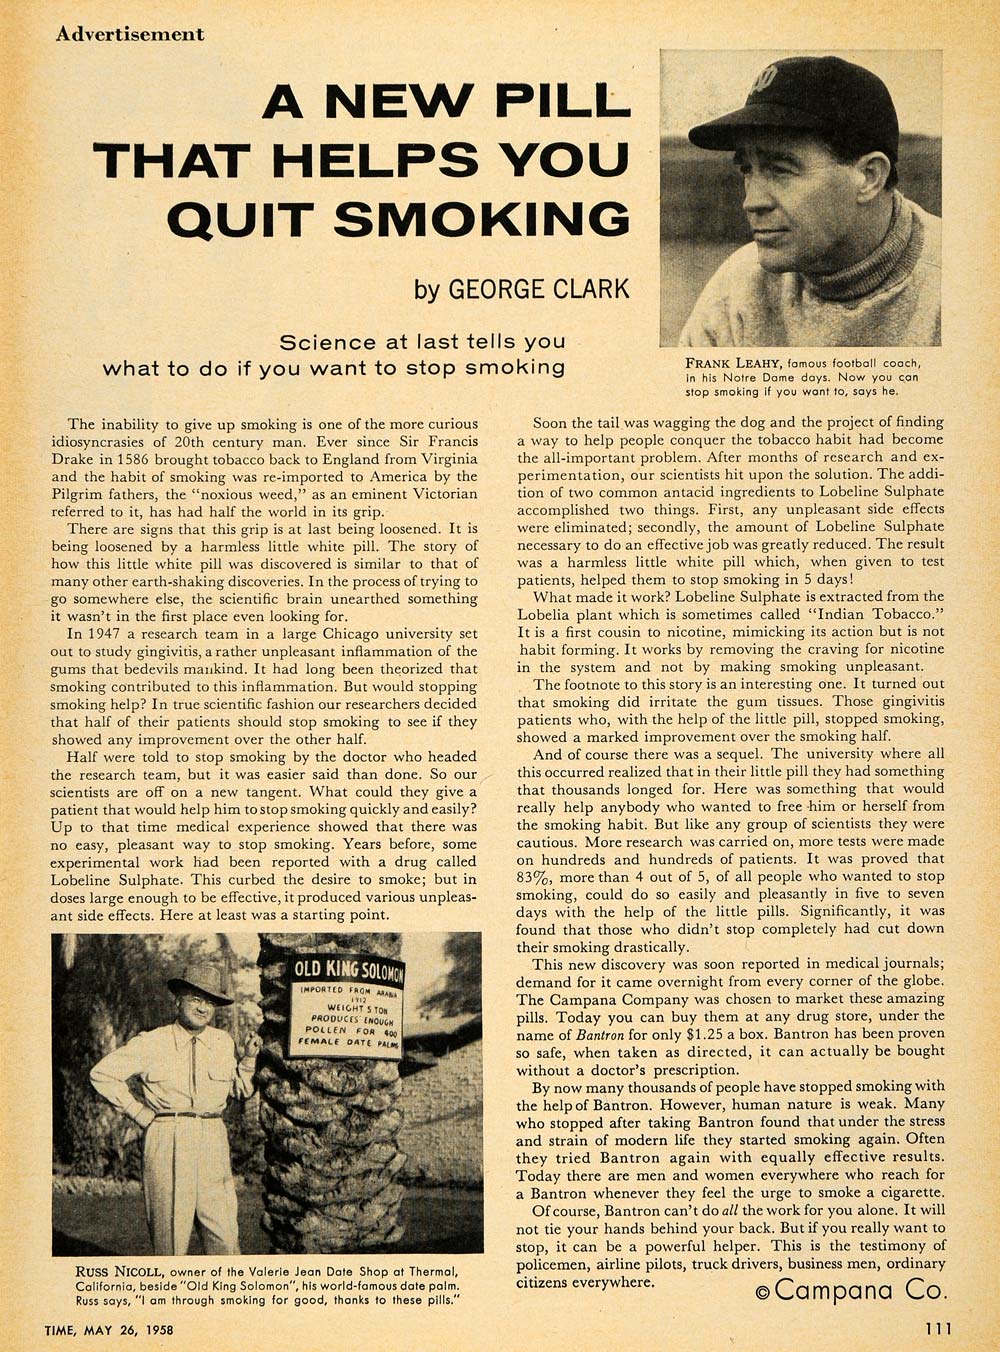 1958 Ad Campana Co. Bantron Quit Smoking Pills F. Leahy - ORIGINAL TM5